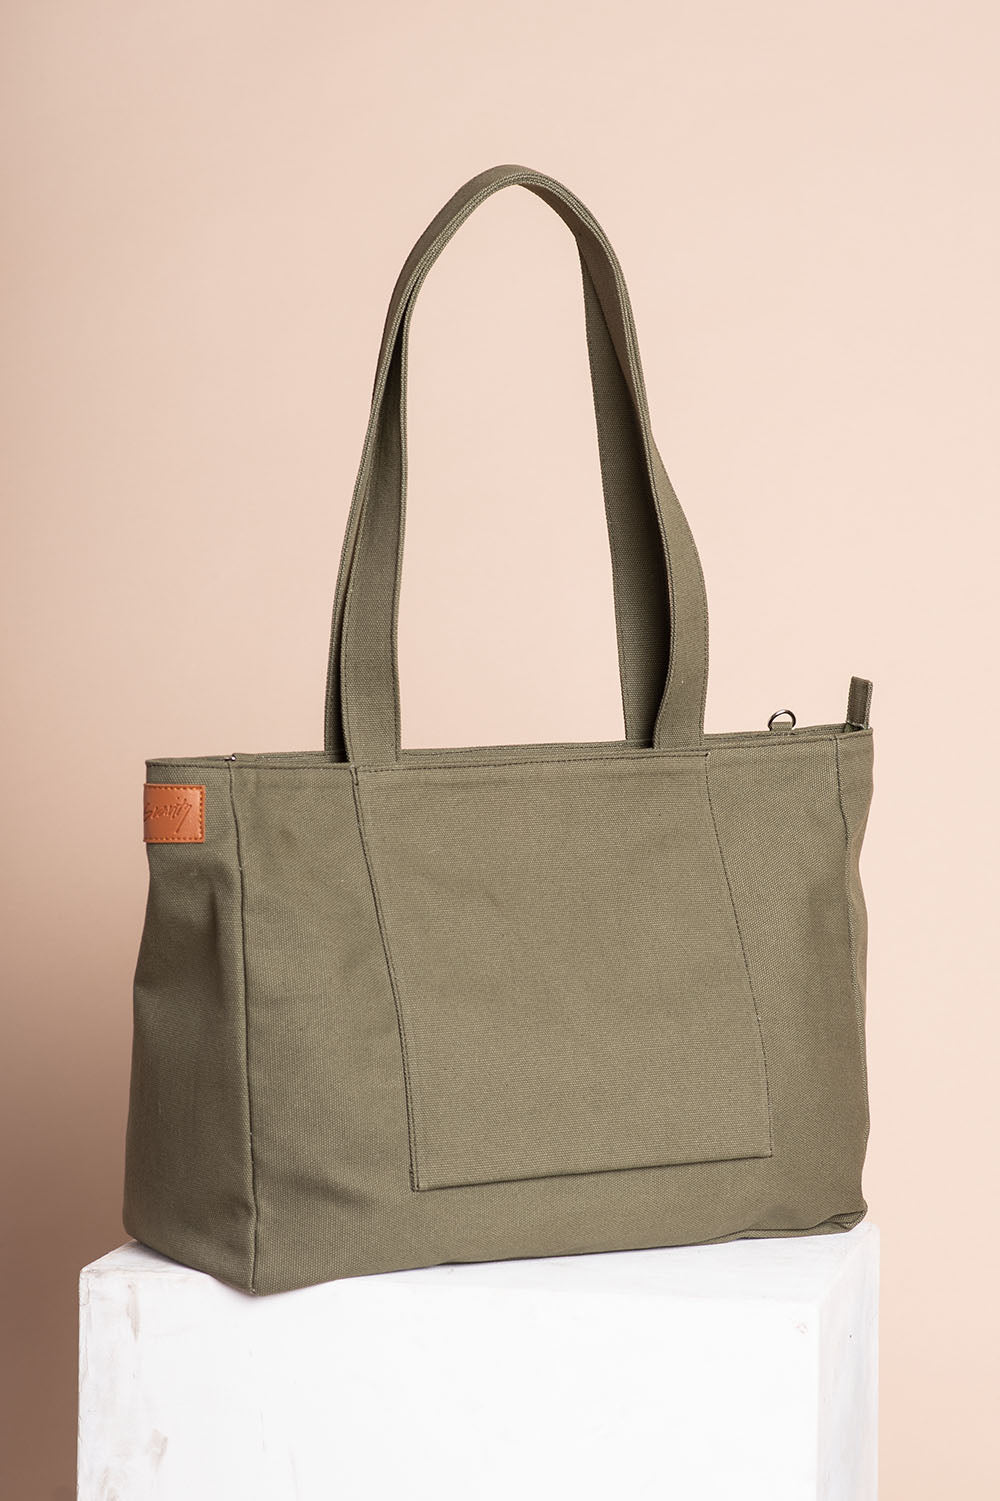 Olive Multi-wear Tote Bag